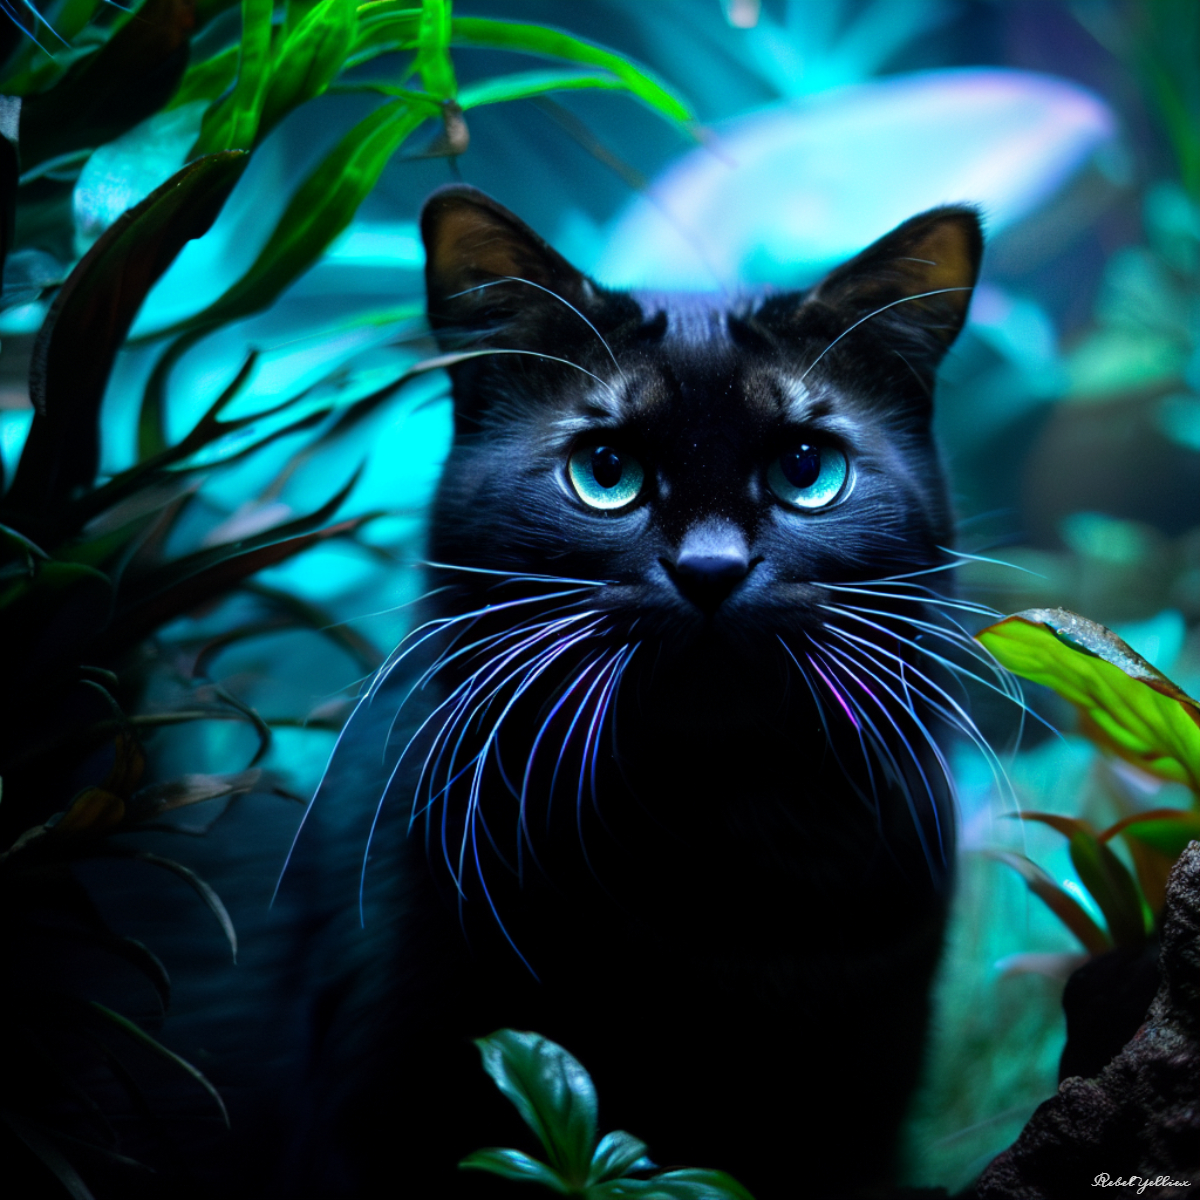 Cat in tropical aquarium portrait close up by xRebelYellx on